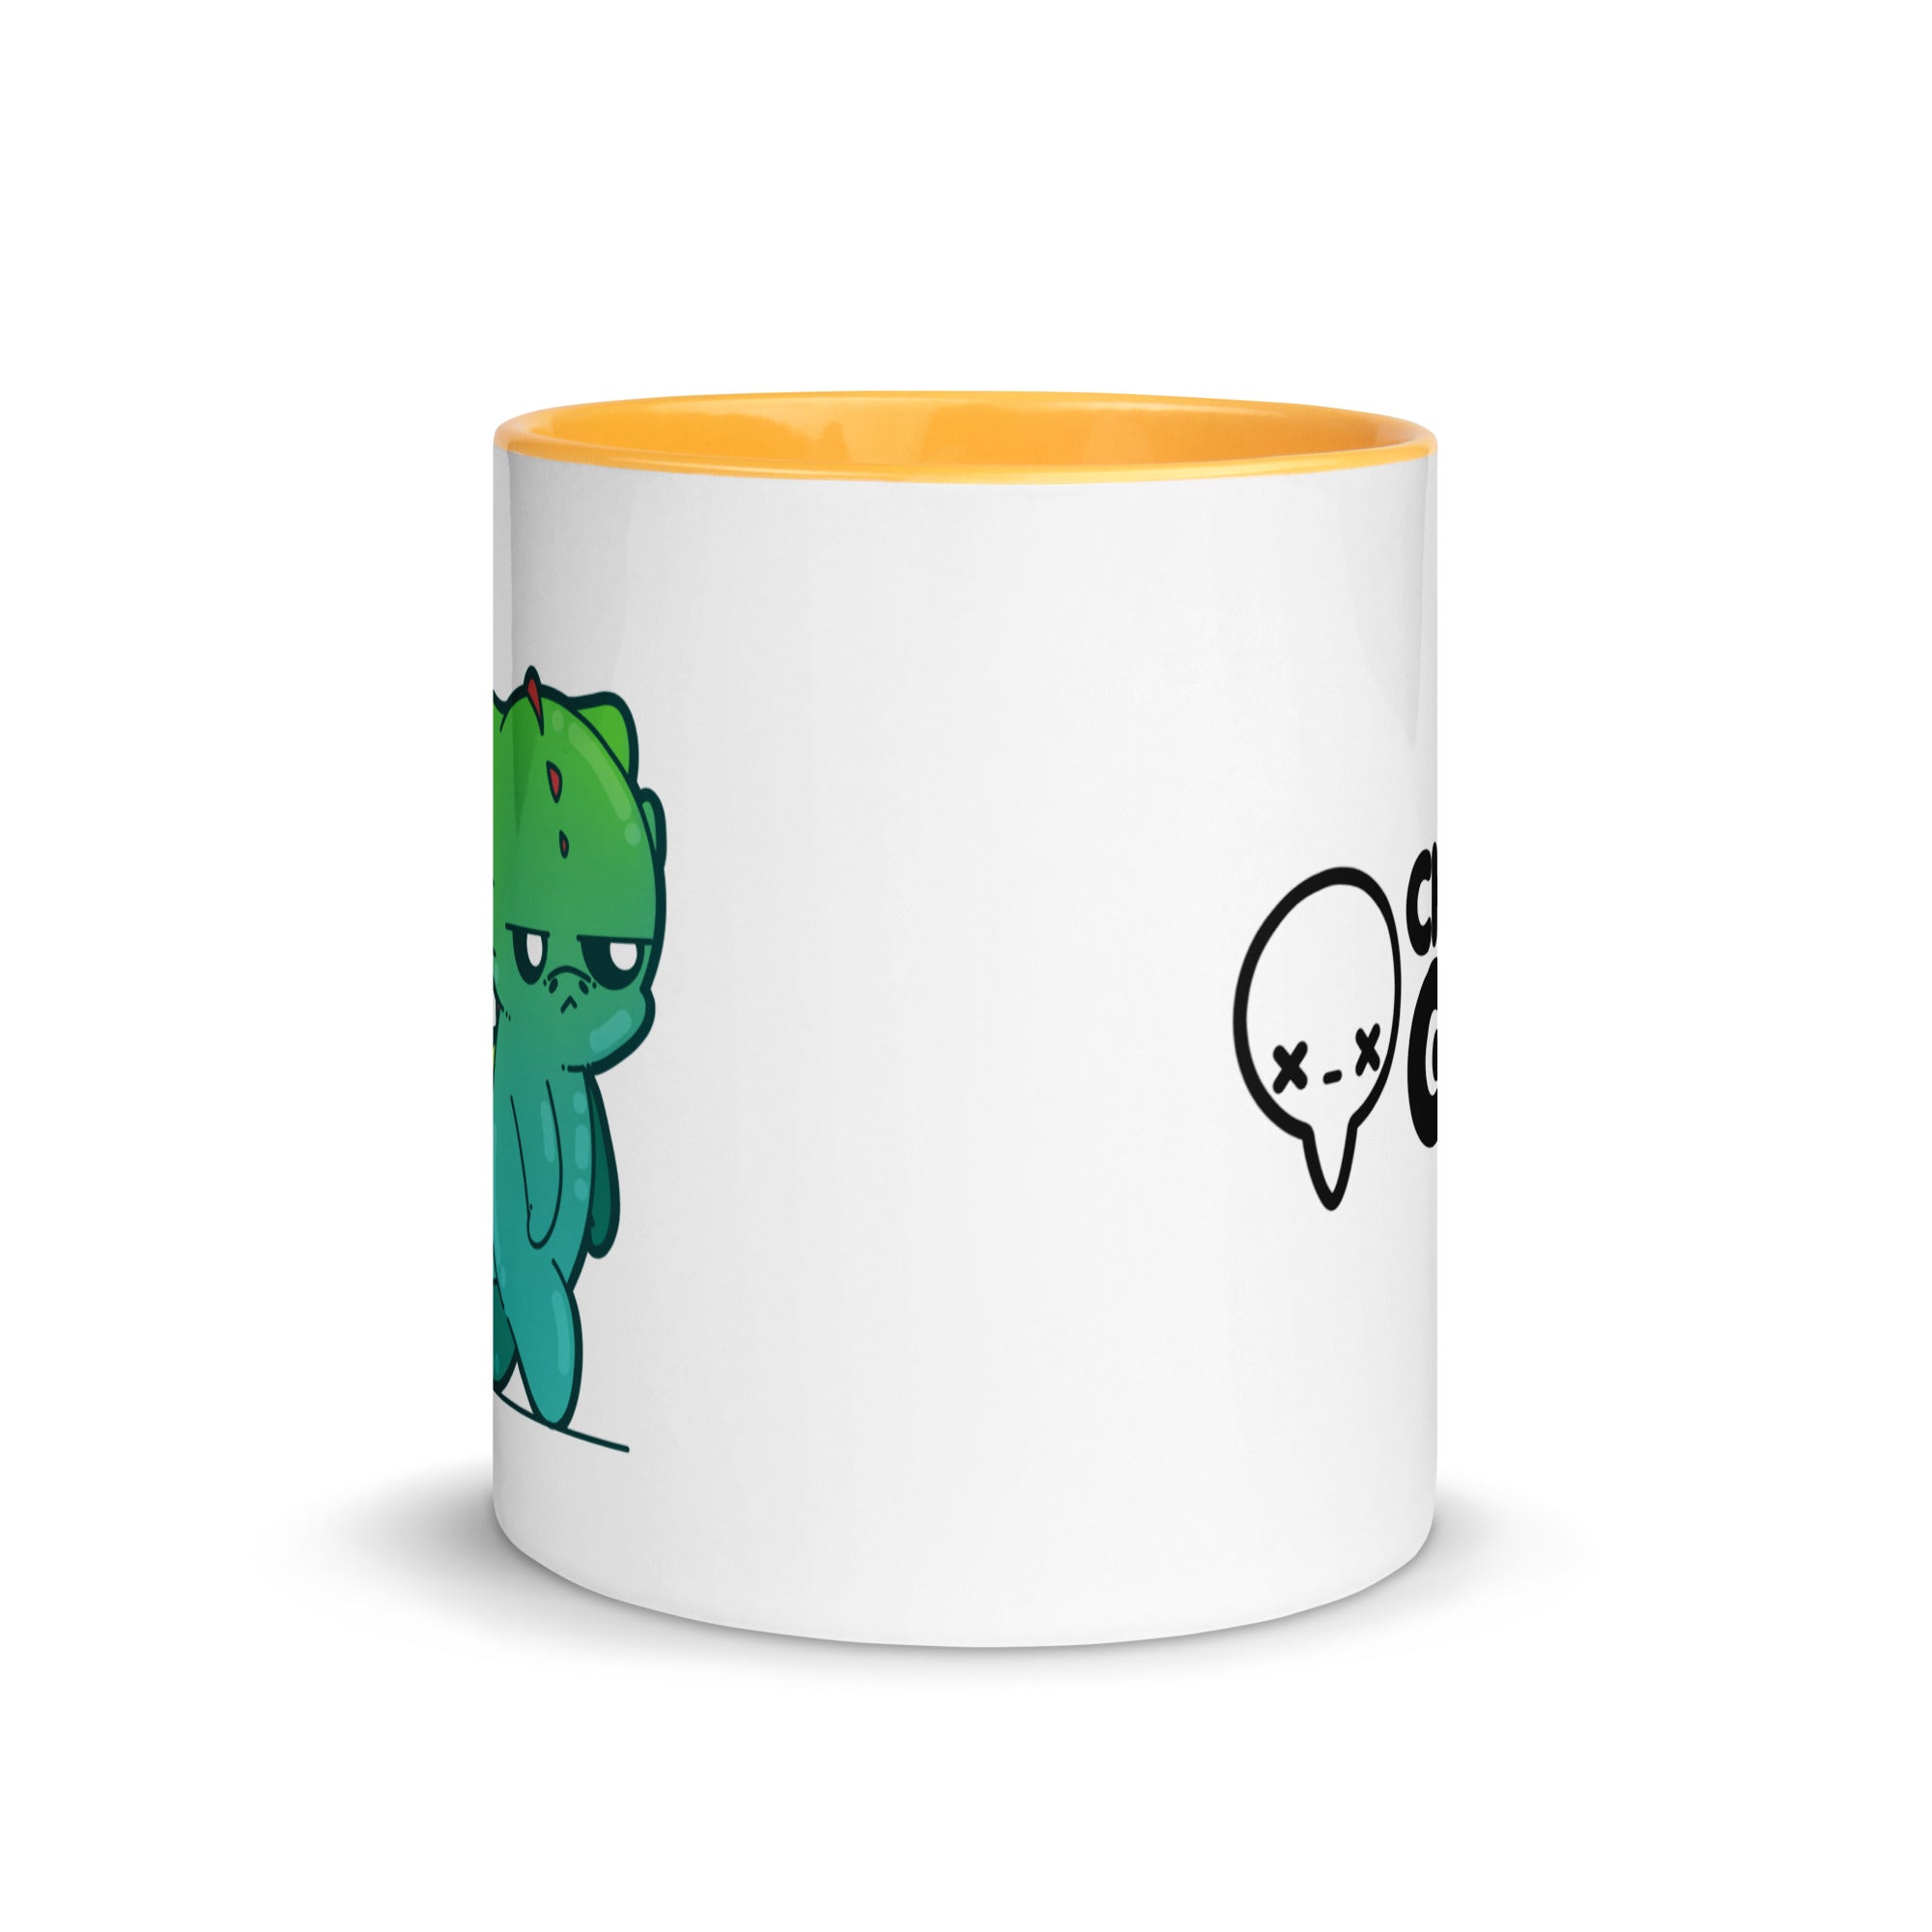 REALLY DRAGON ASS TODAY - Mug with Color Inside - ChubbleGumLLC